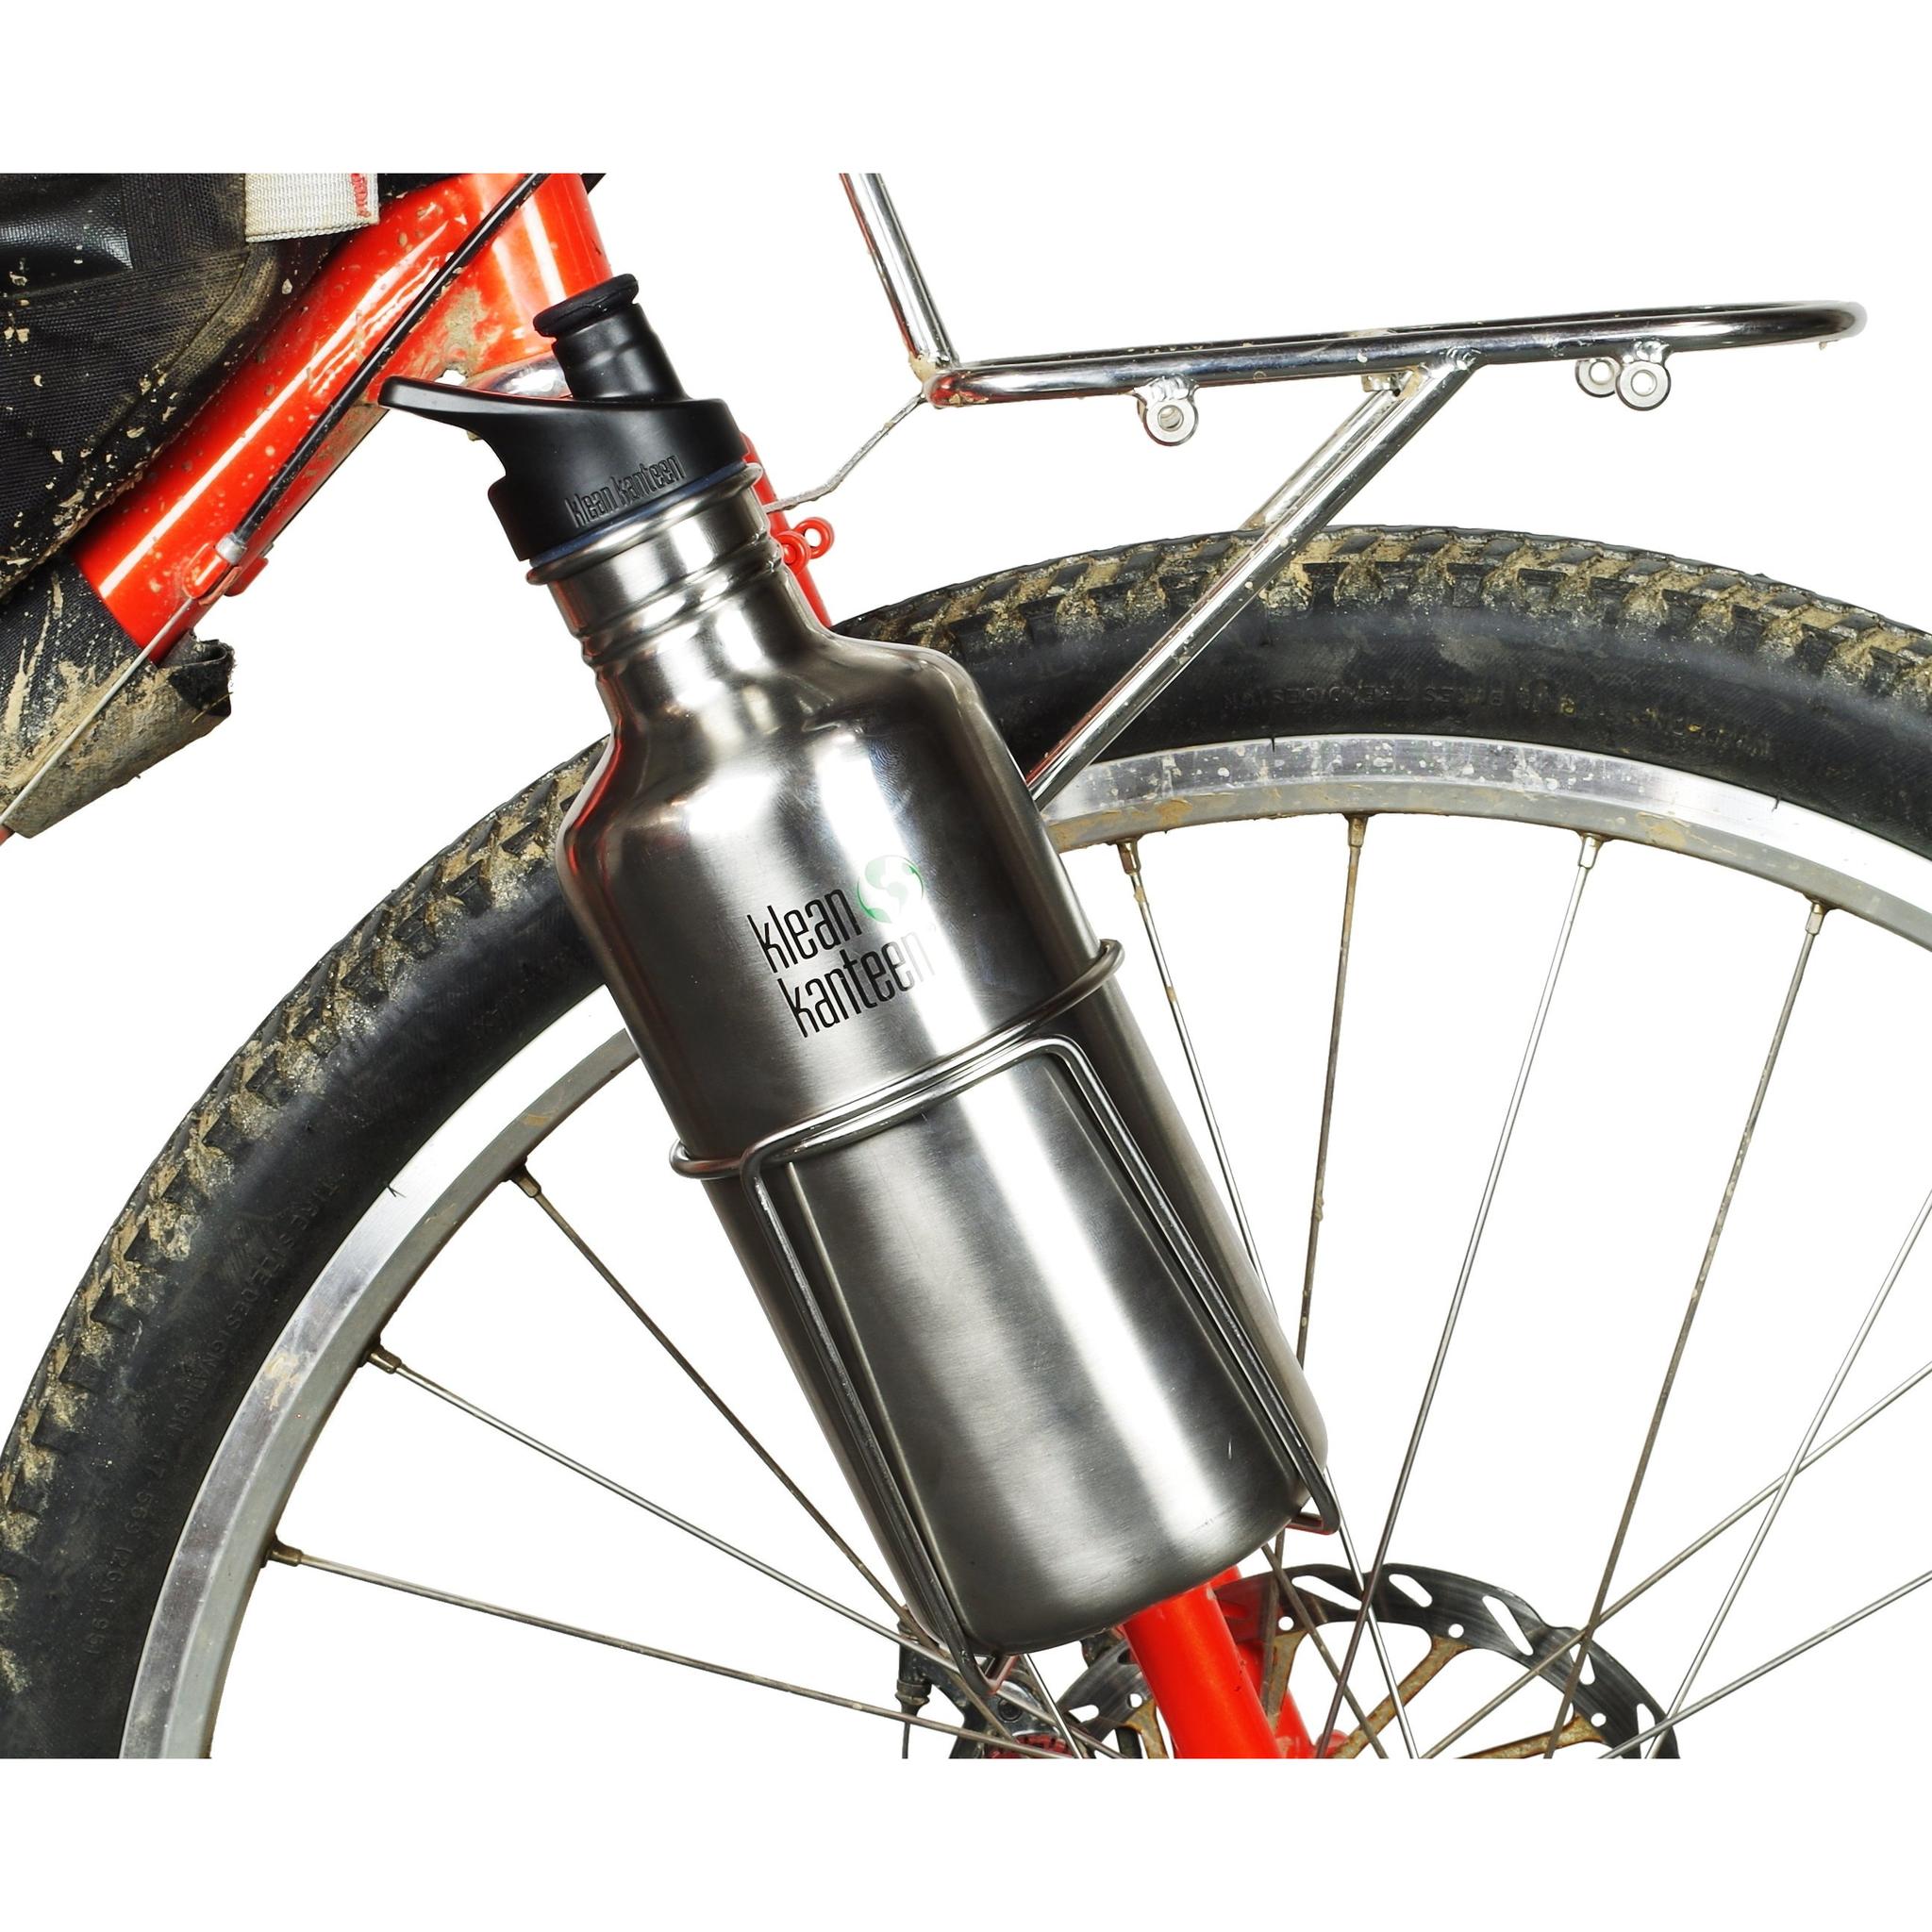 32 oz bike water bottle holder